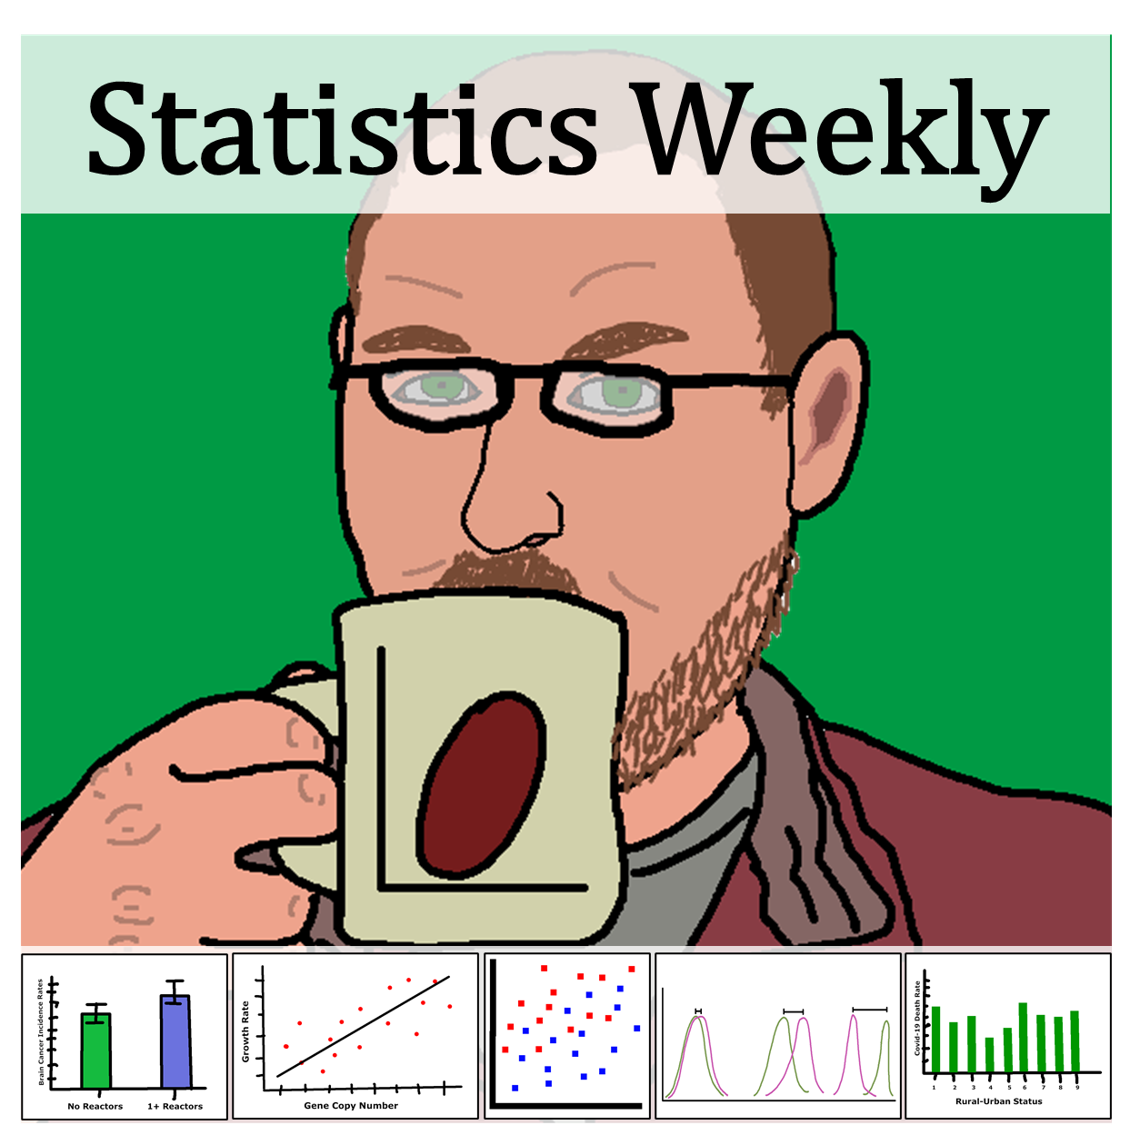 Statistics Weekly image